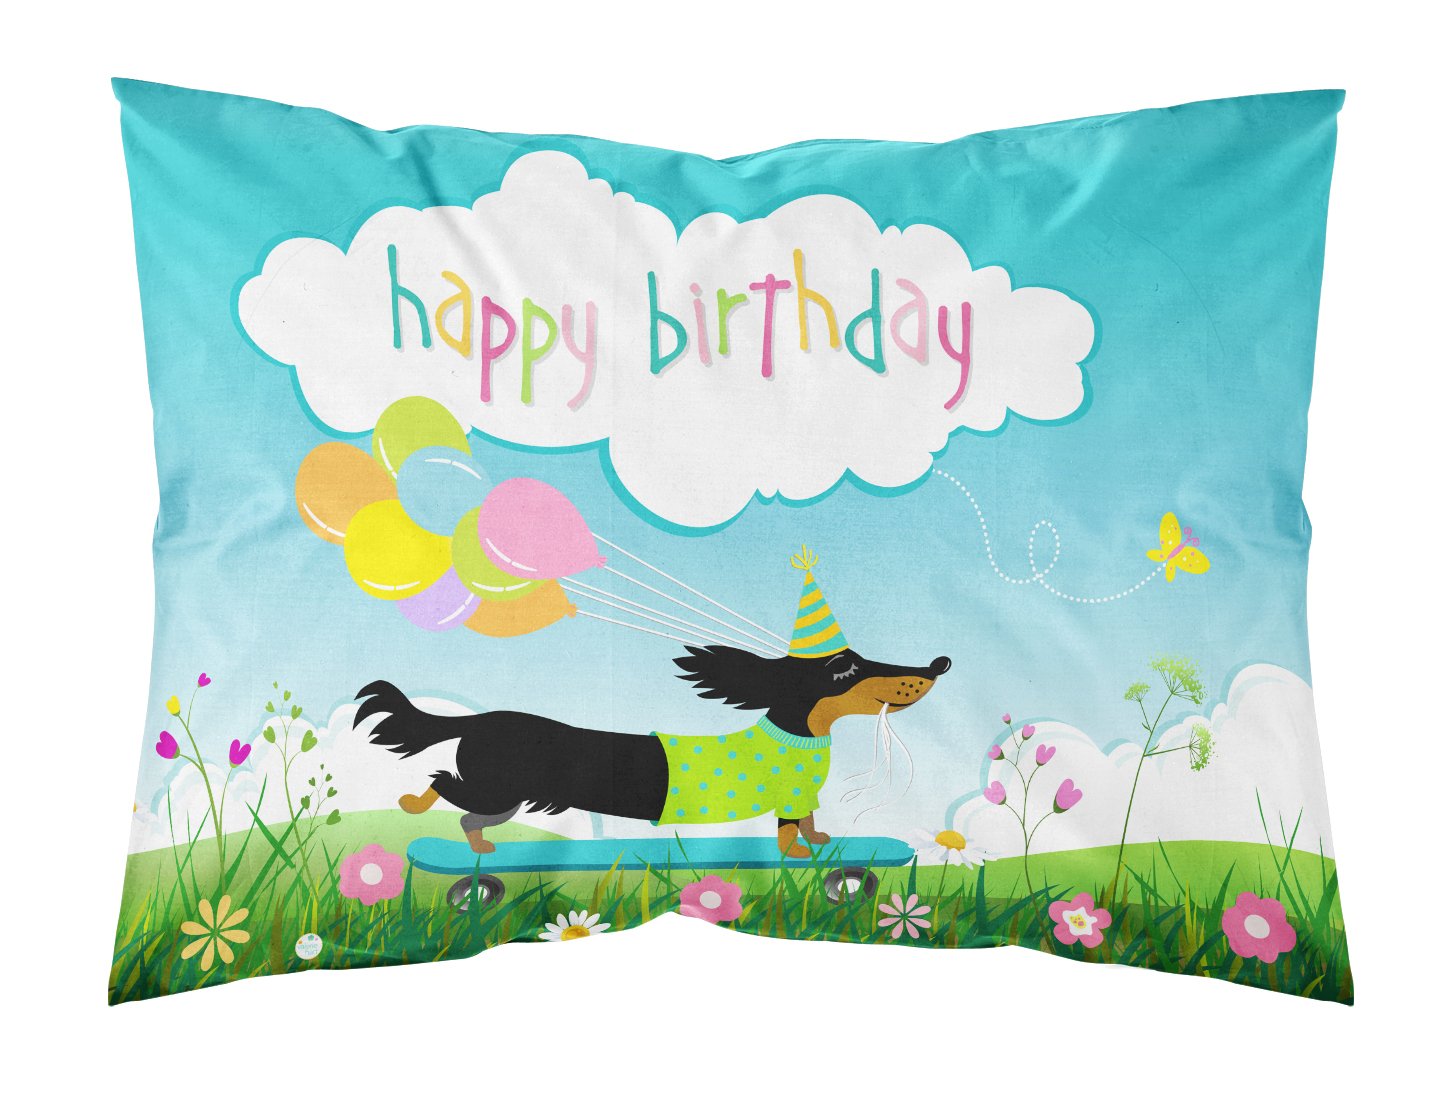 Happy Birthday Dachshund Fabric Standard Pillowcase VHA3029PILLOWCASE by Caroline's Treasures